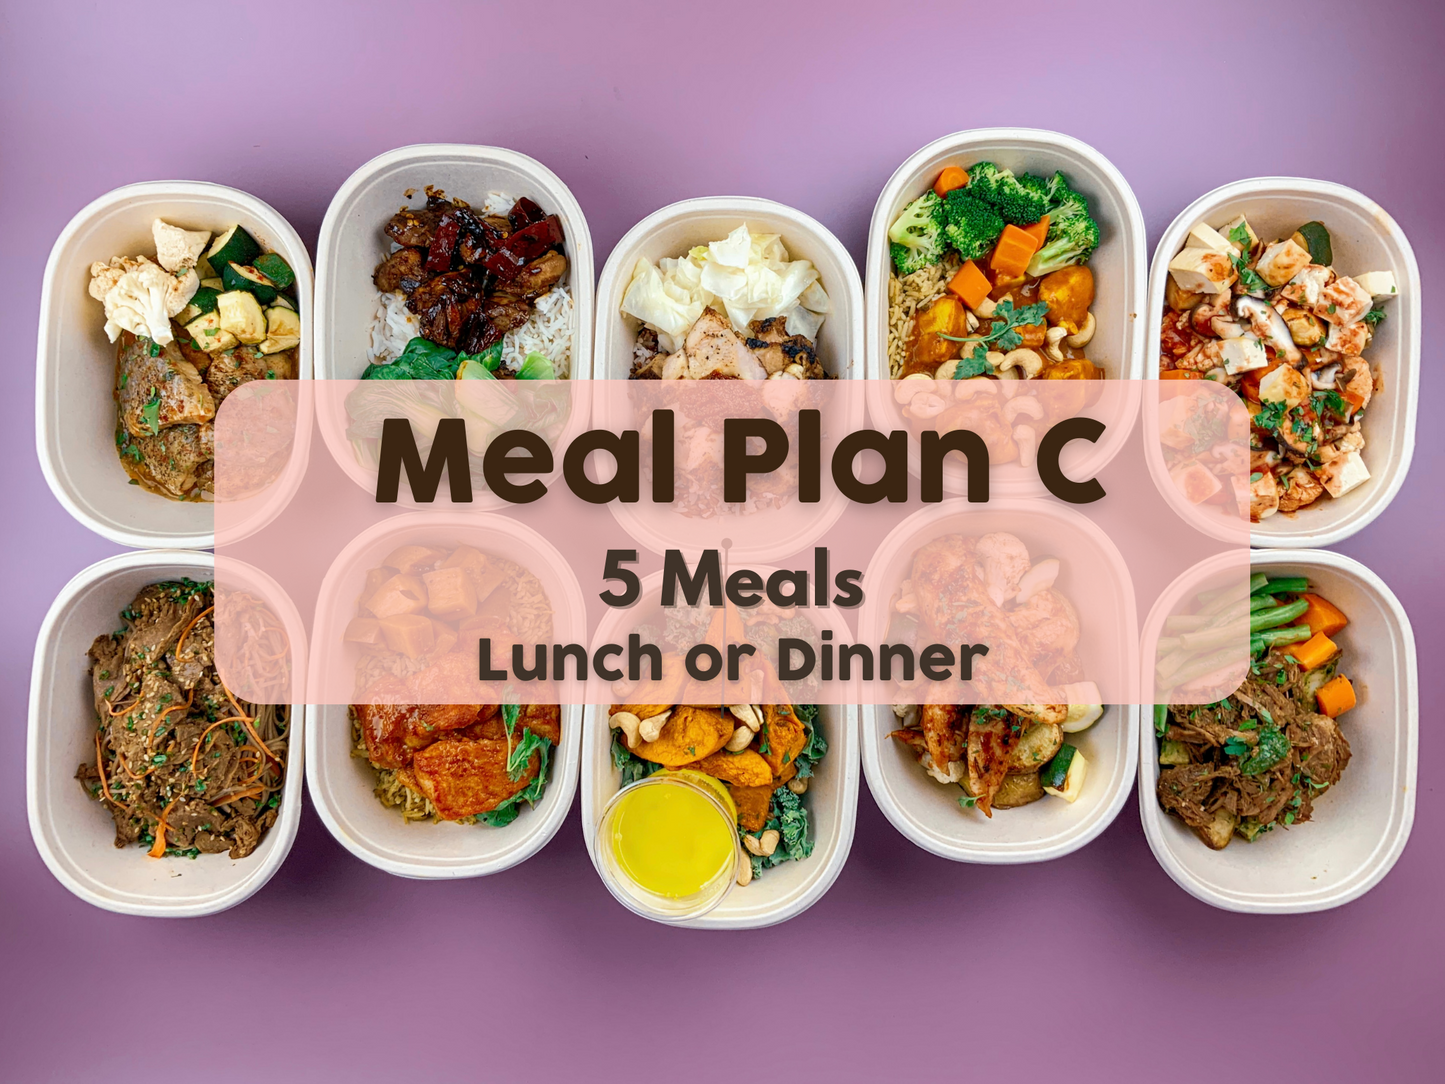 4th - 8th December Meal Plan C